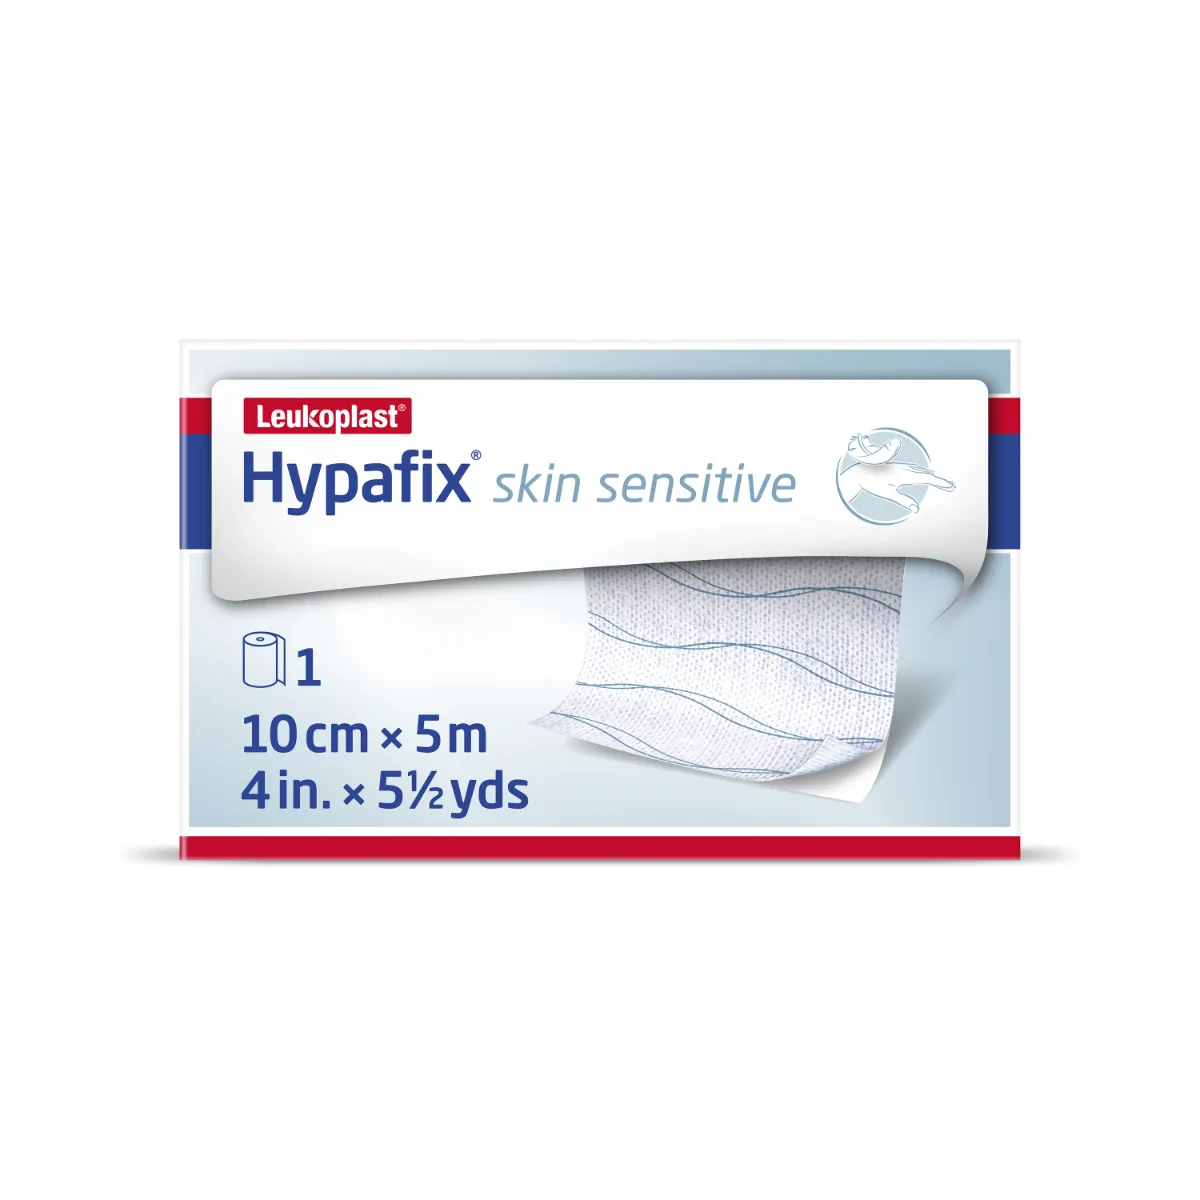 Leukoplast Hypafix Skin Sensitive 10 cm x 10 m 1 ks